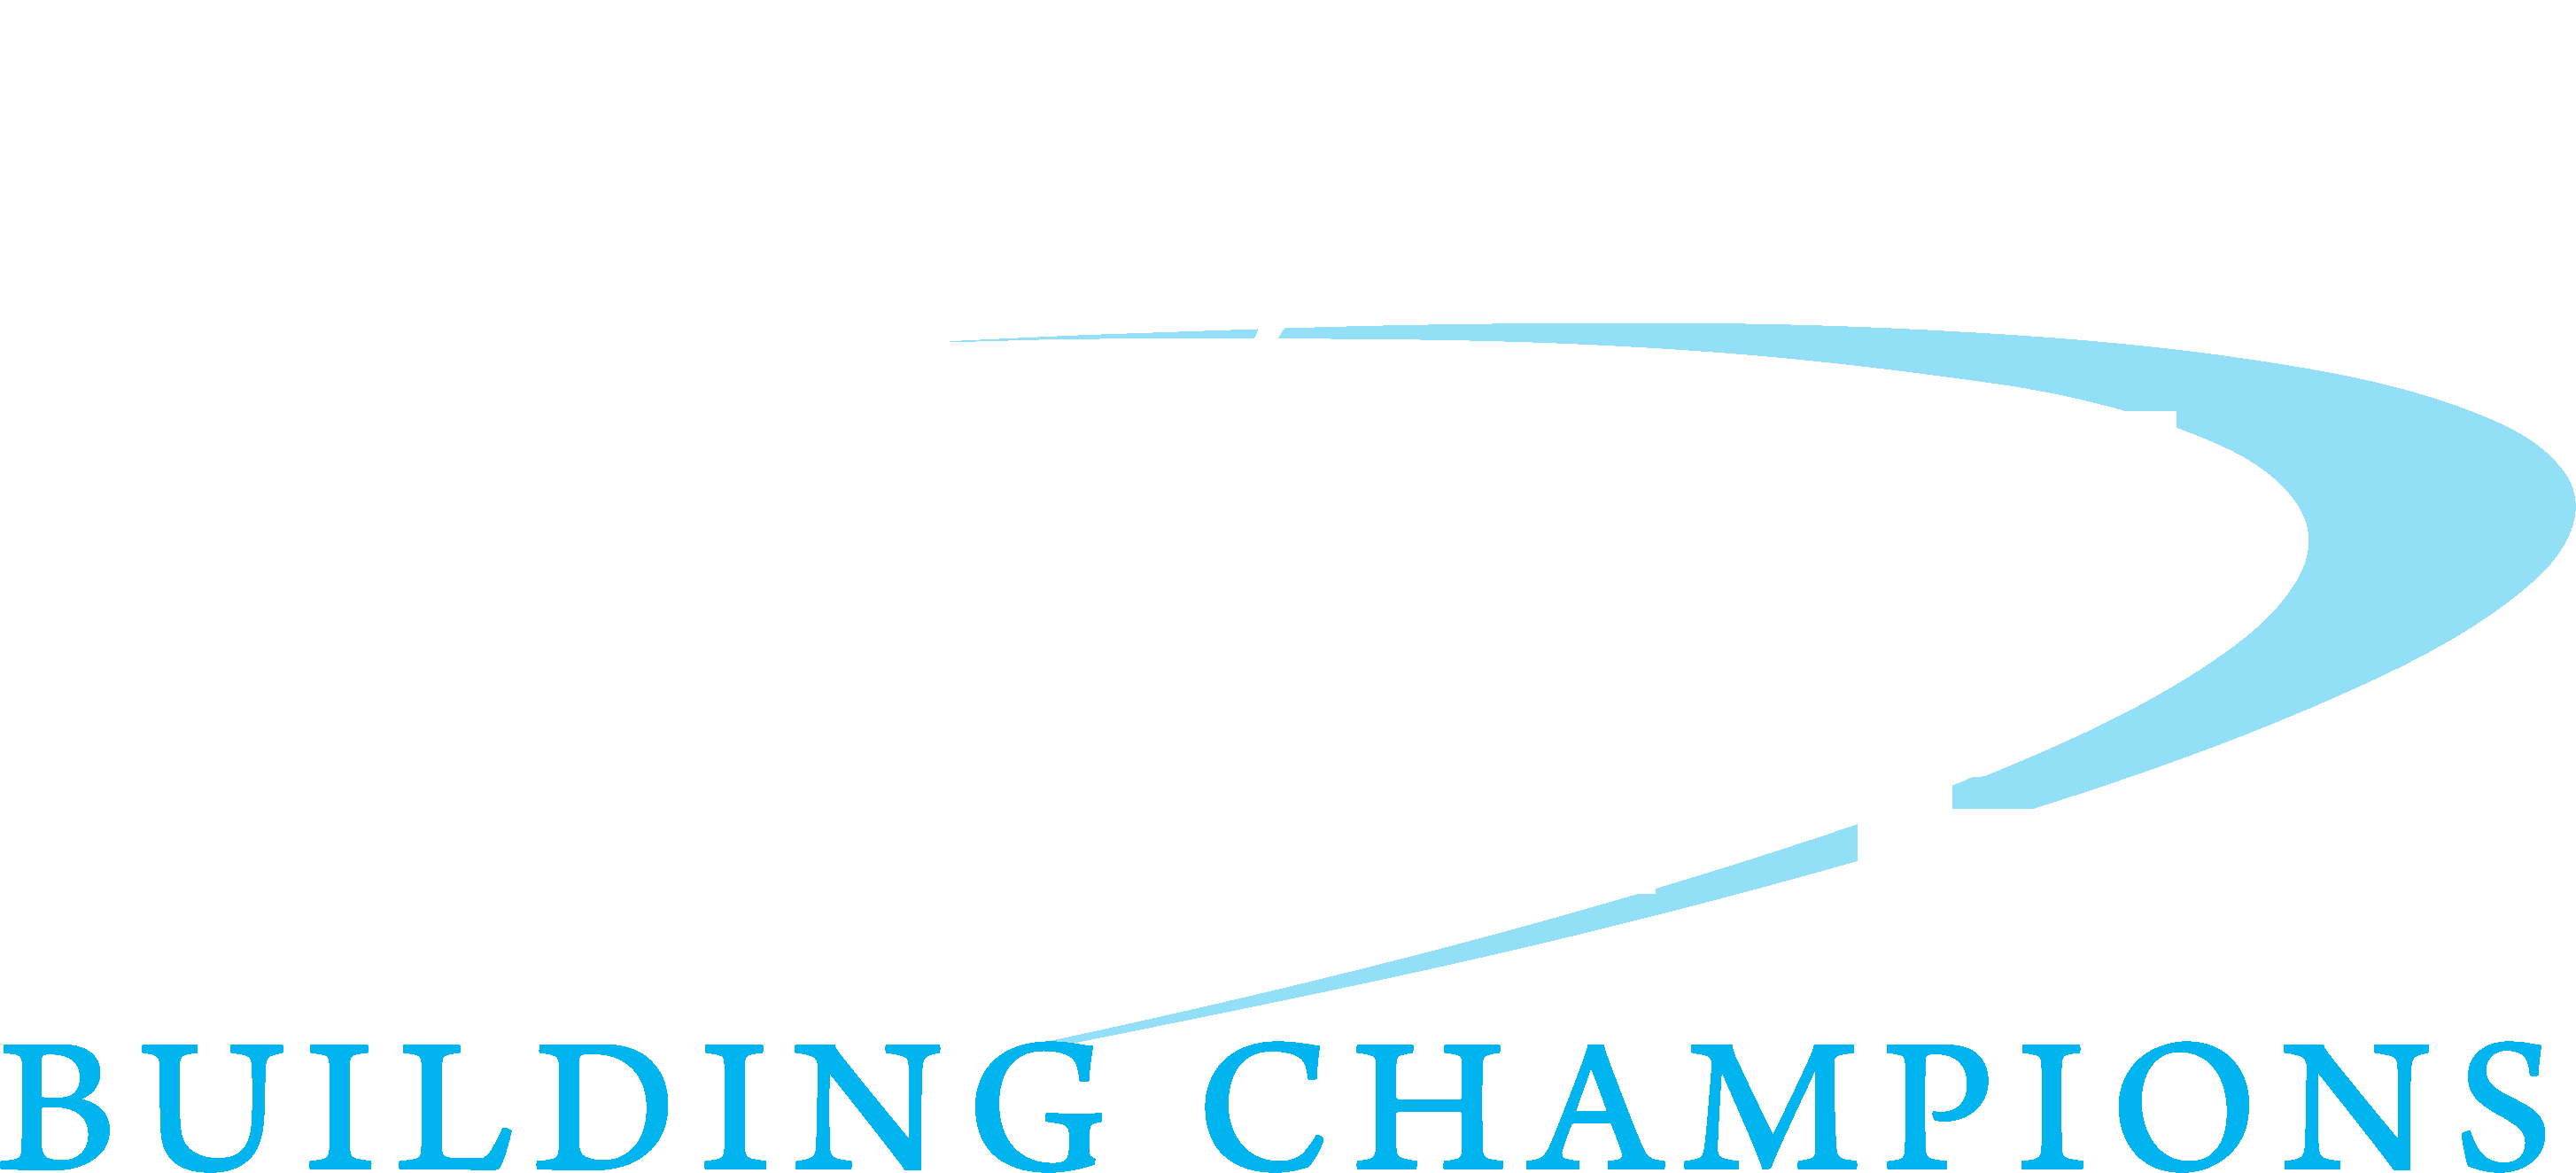 The trojans unite logo